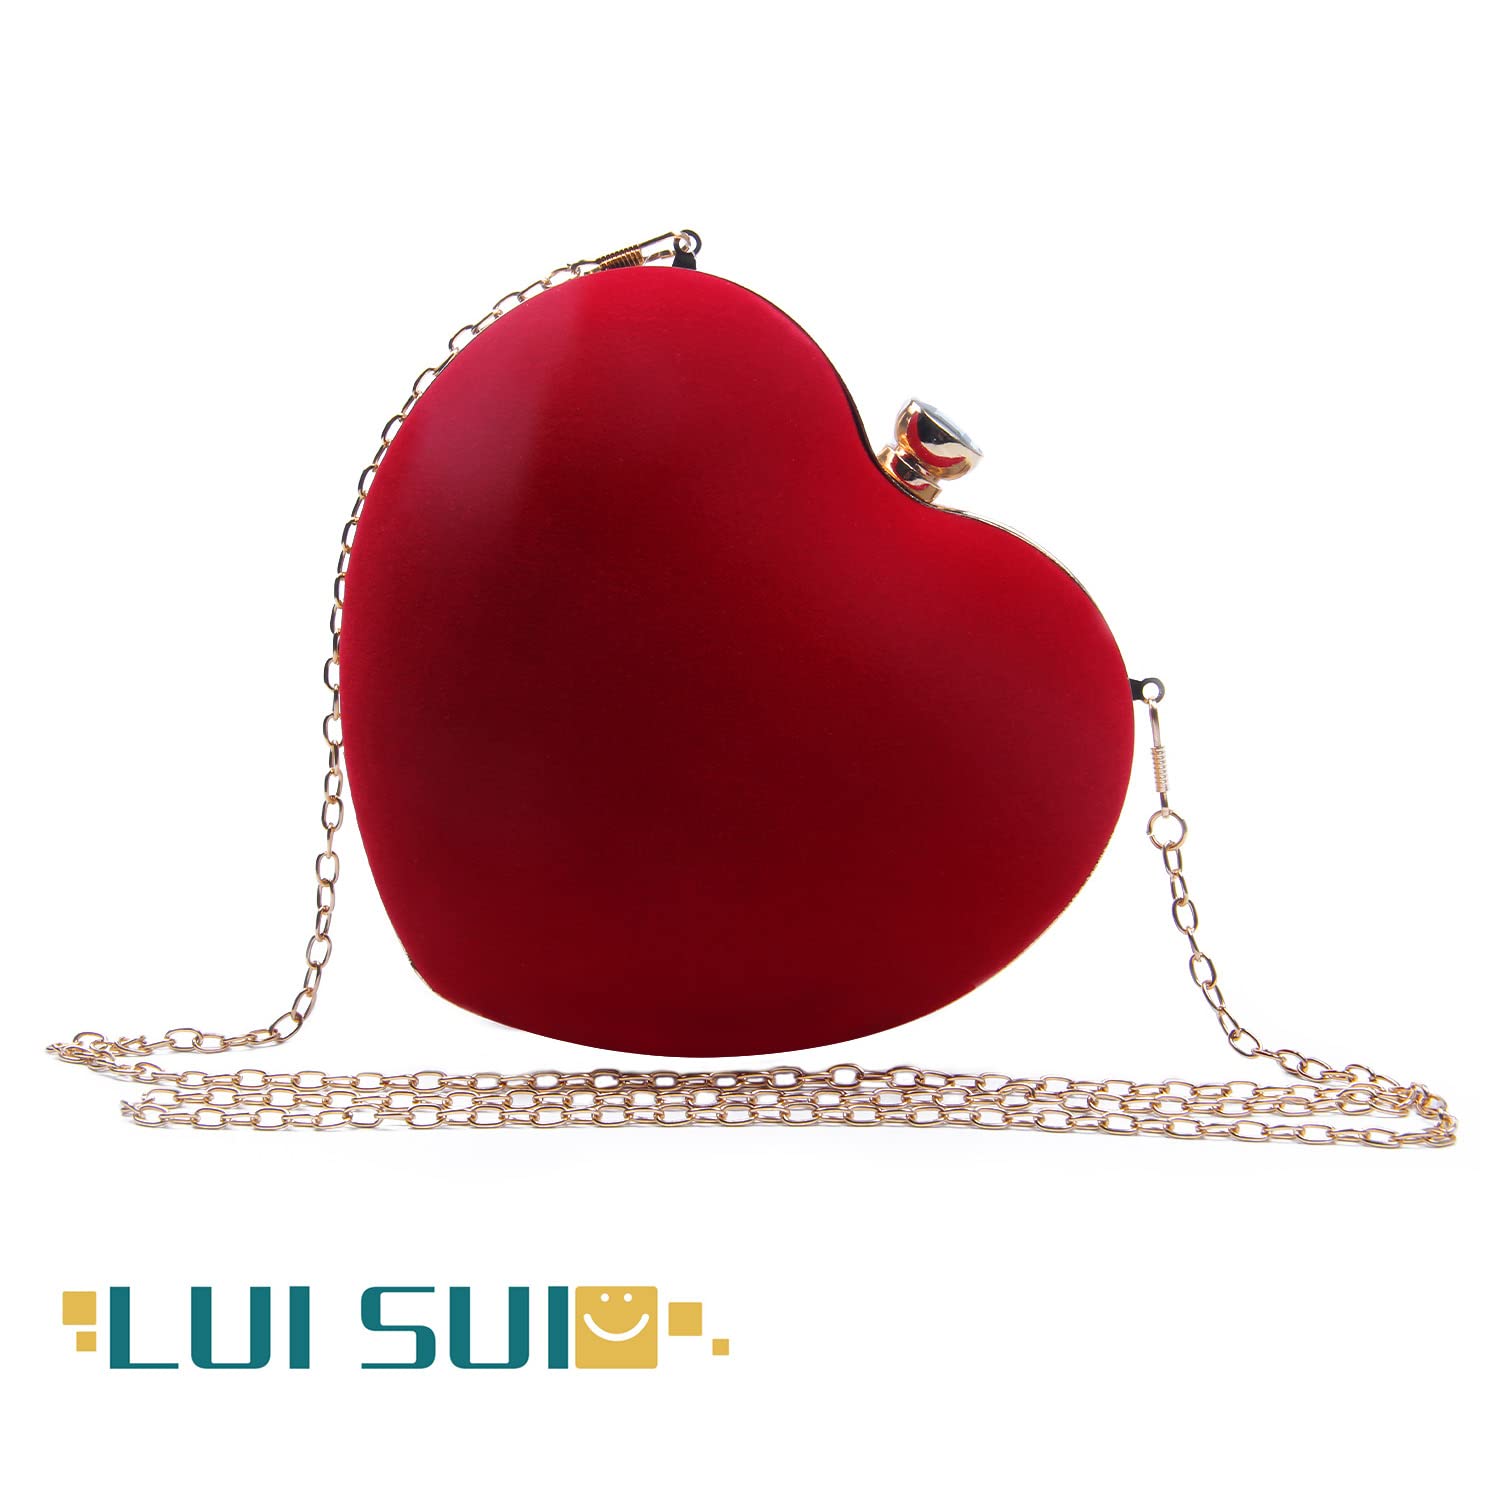 Lui Sui Women's Heart Purse